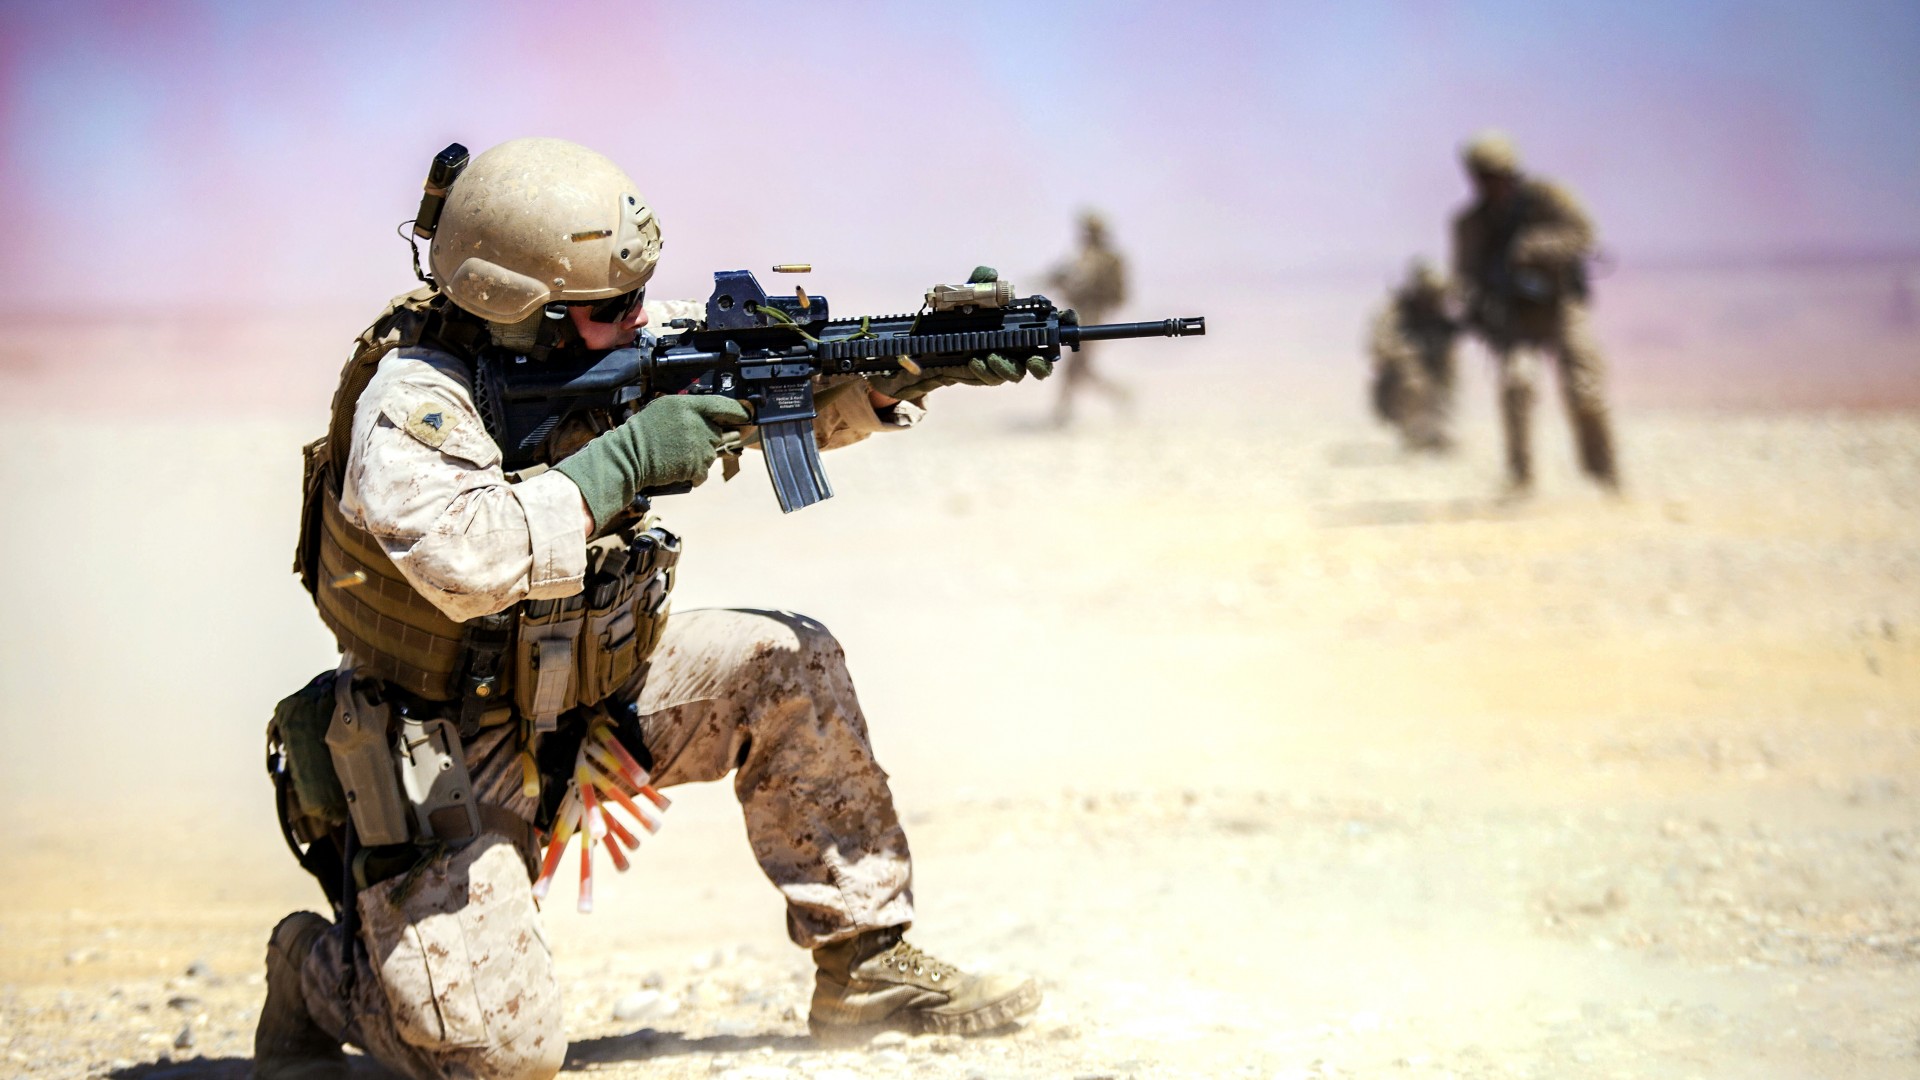 Армия США, Ирак, карабин, стрельба, пустыня, M4, carbine, assault rifle, U.S. Army, soldier, Iraqi, desert, firing (horizontal)